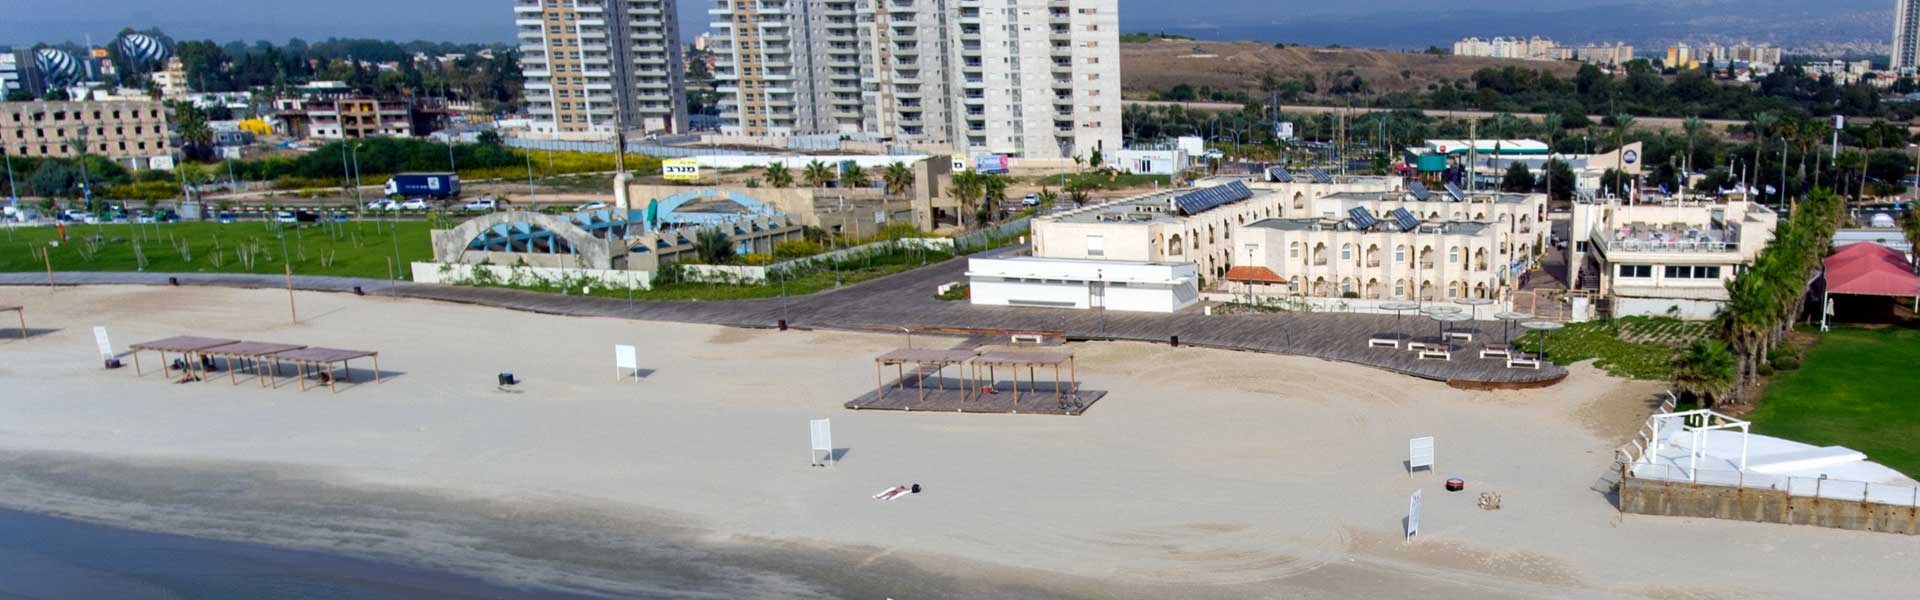 Acco Beach Hotel - outside view